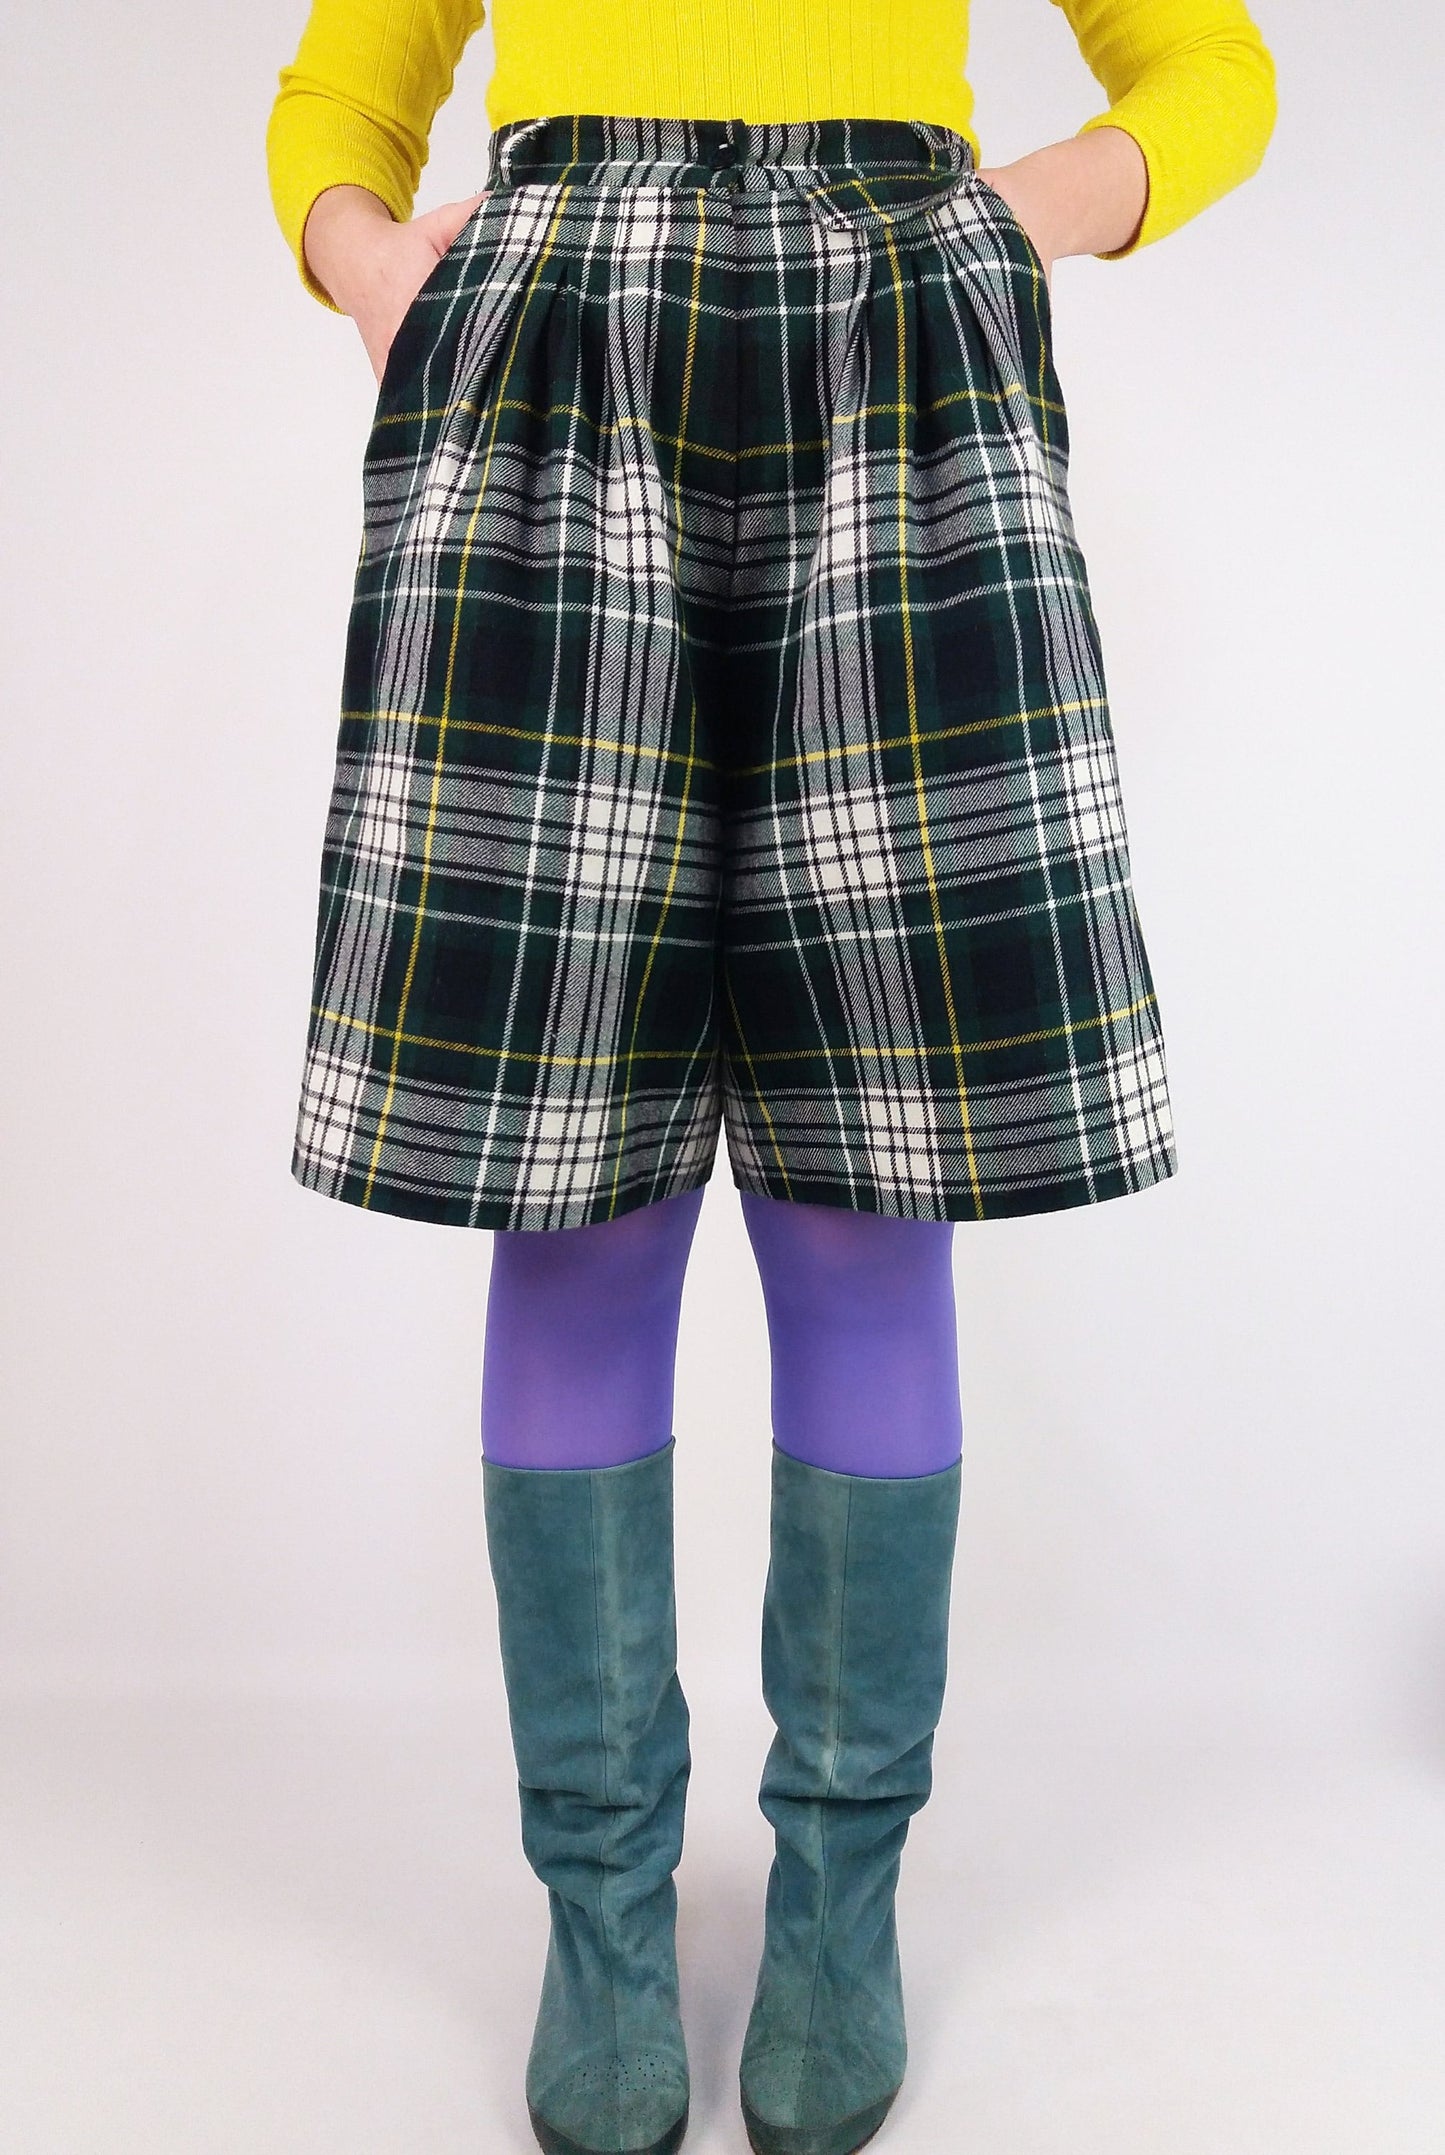 GERRY WEBER 80's High Waist Check Plaid Wool Culottes Shorts